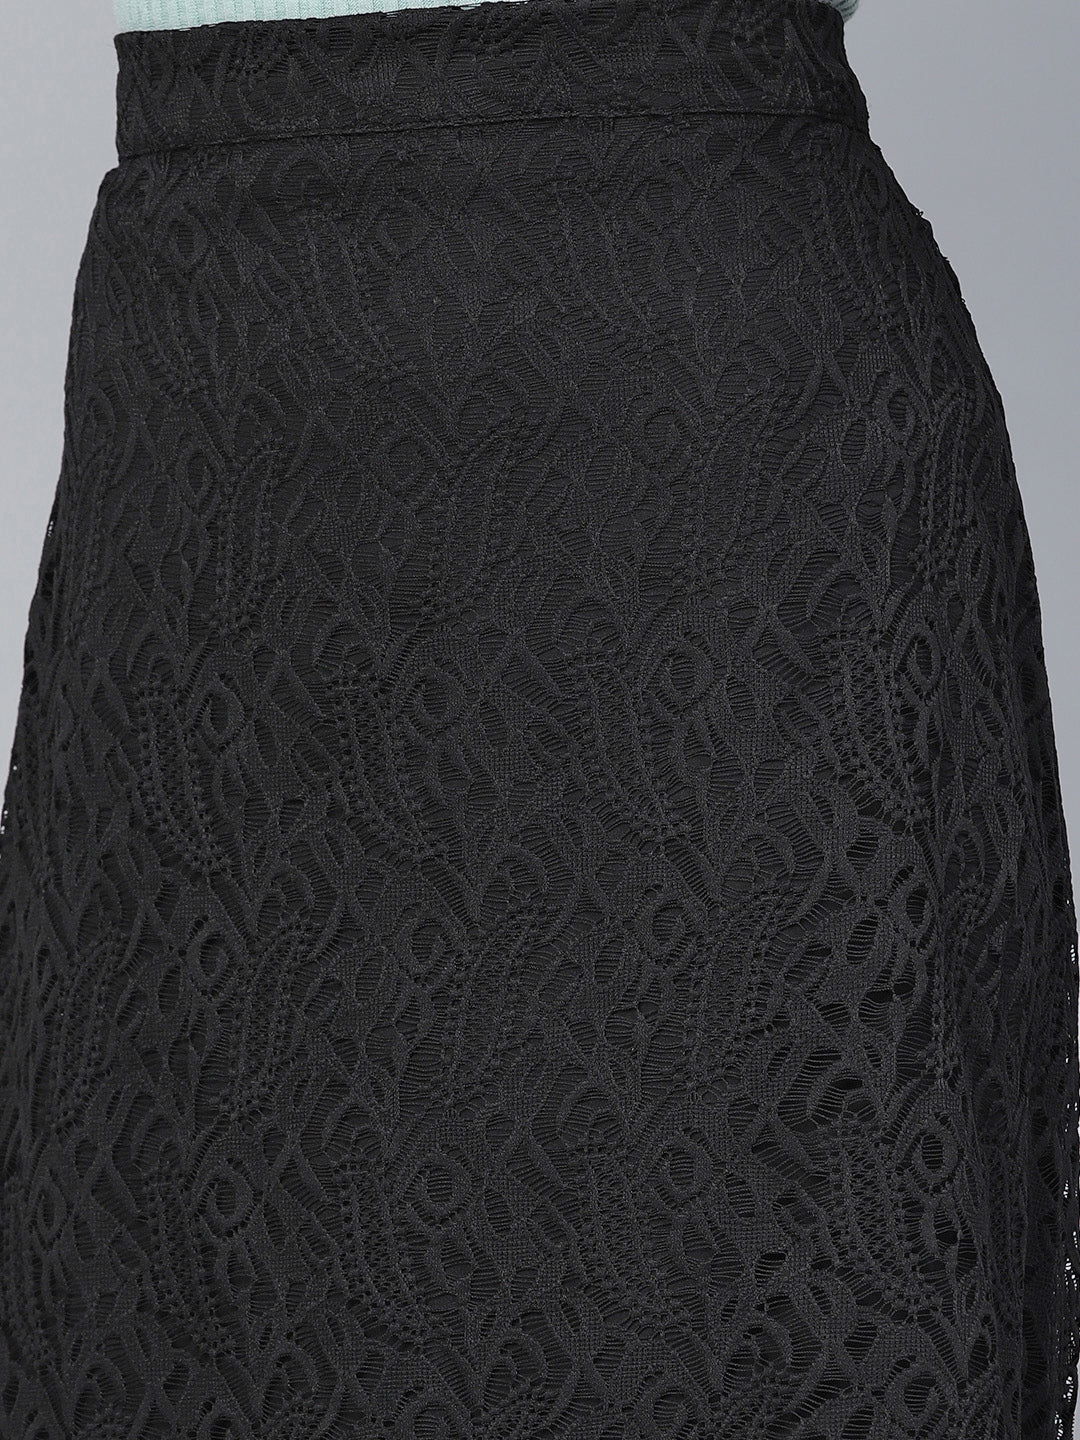 Athena Black Lace A-Line Skirt - Athena Lifestyle